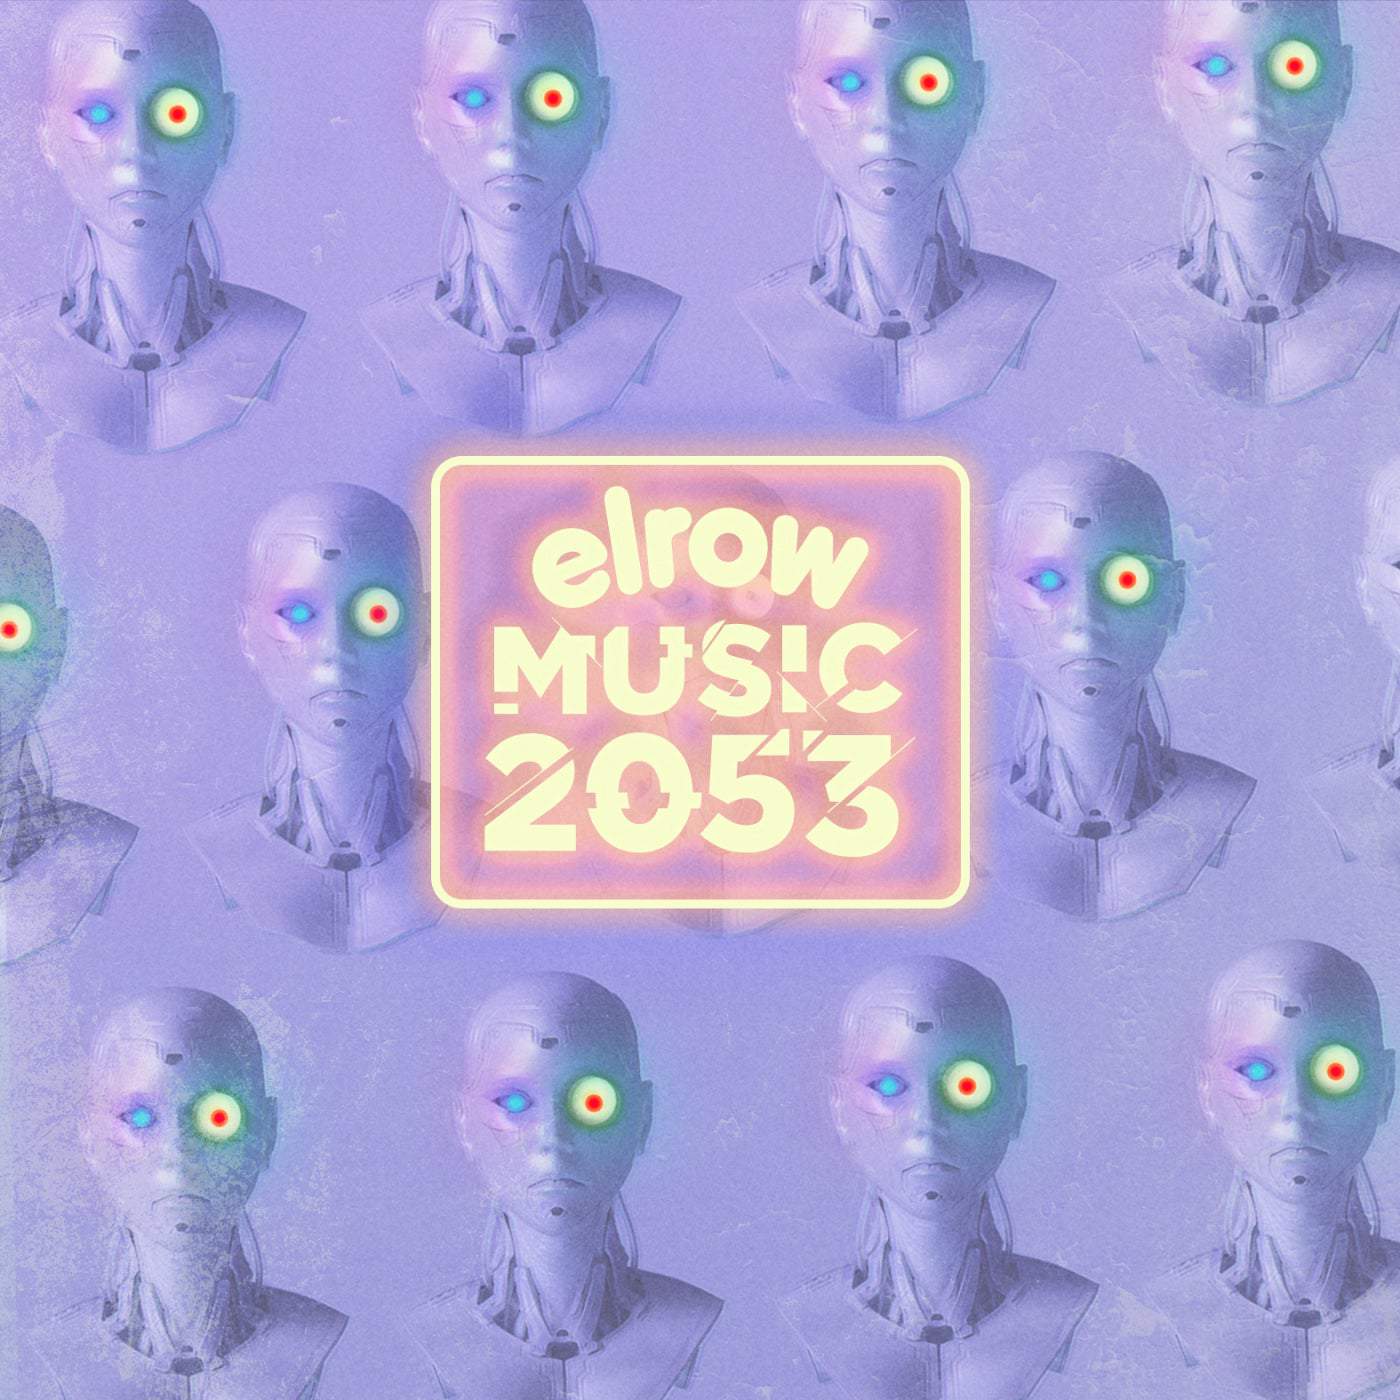 image cover: VA - elrow music 2053 on elrow Music